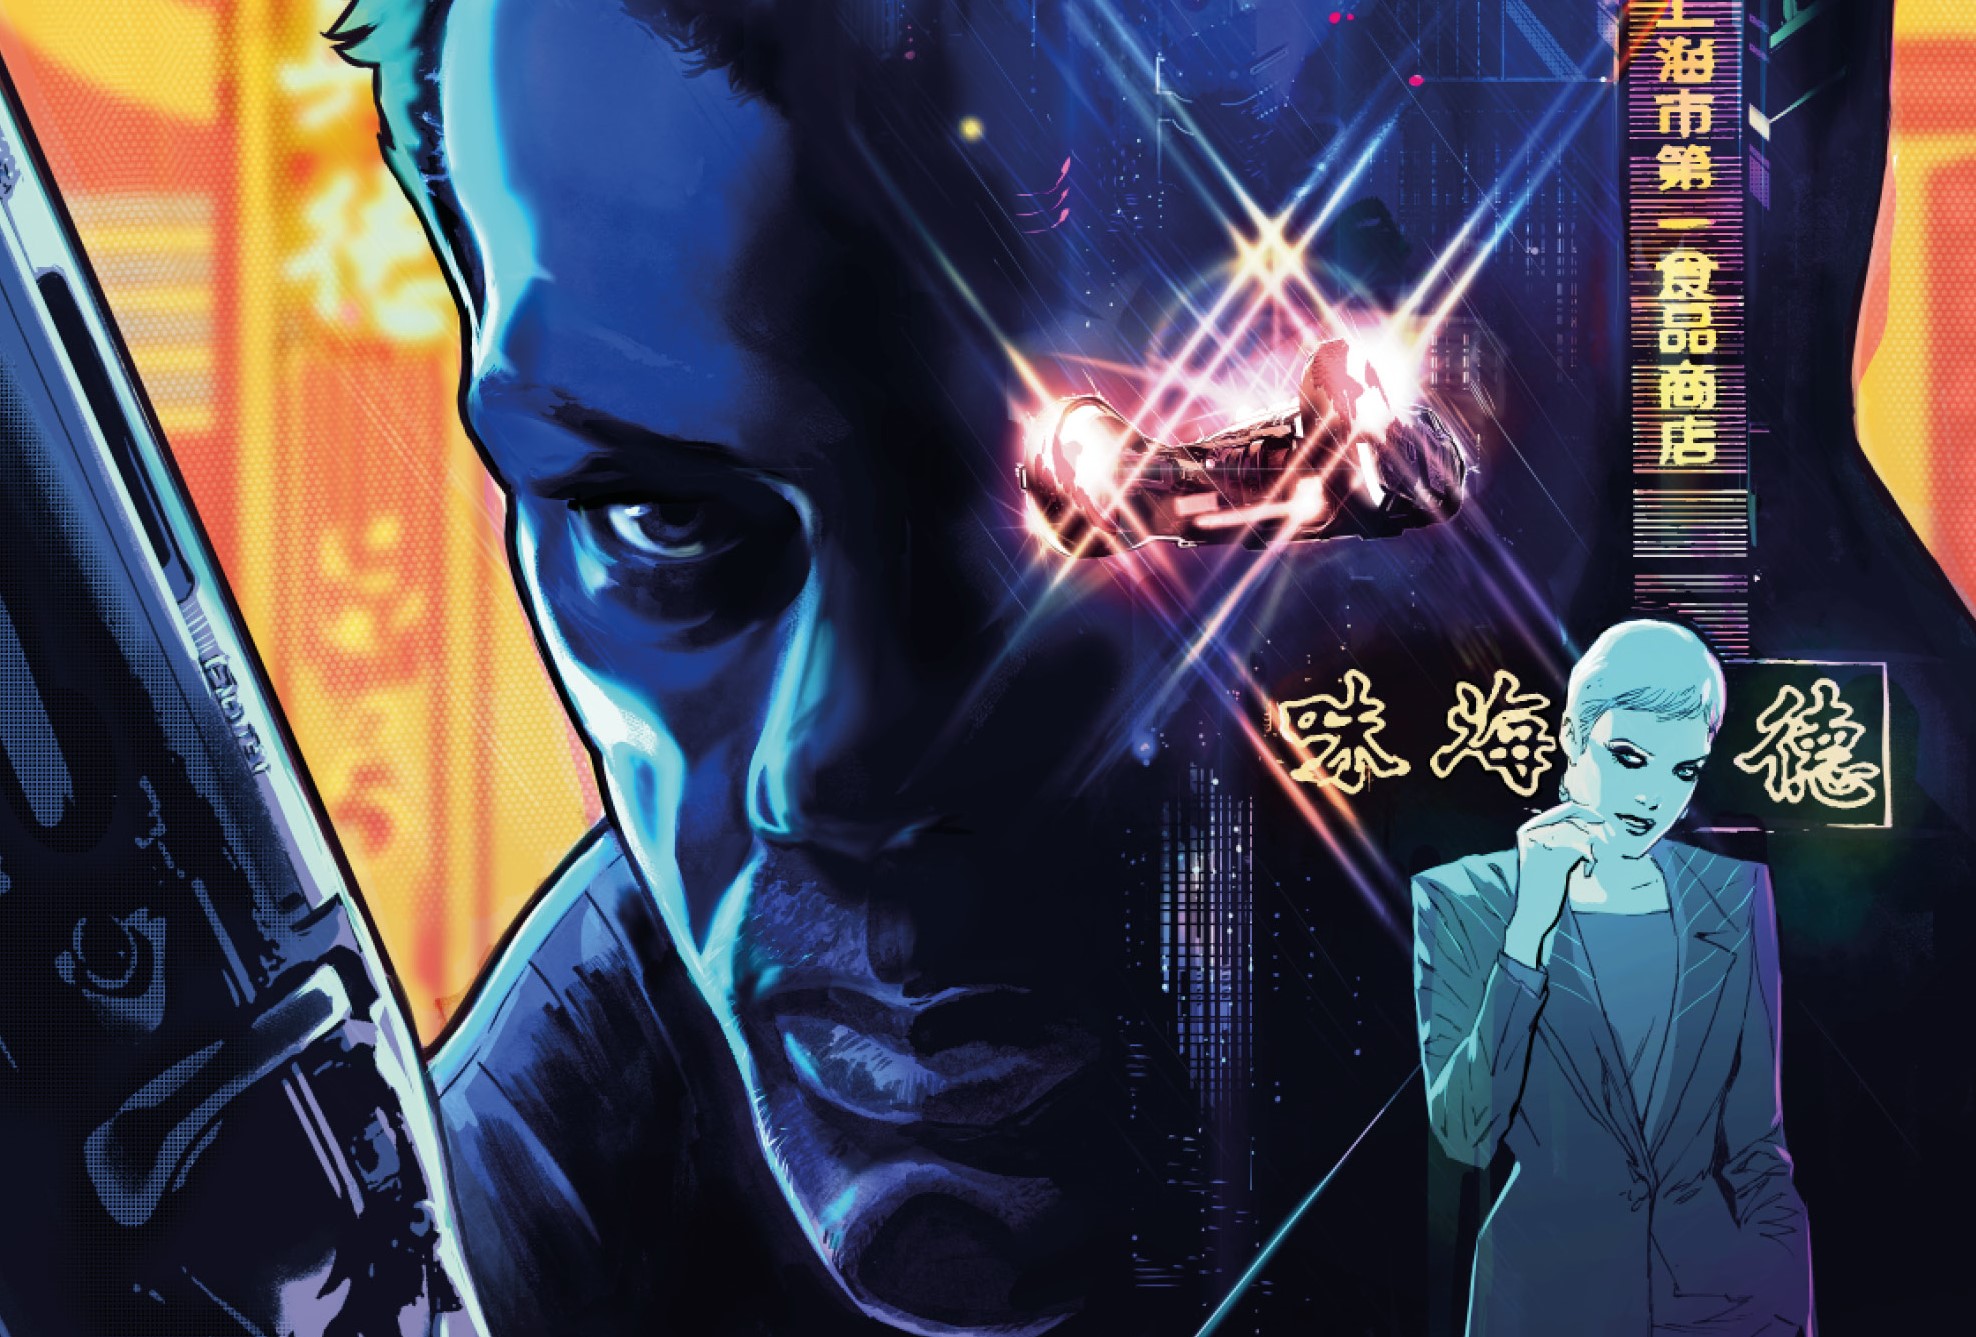 Dagnino, Ferando; Perkins, K; Brown, Mellow; Johnson, Mike. Blade Runner: Origins #1. Titan Comics. 2021.